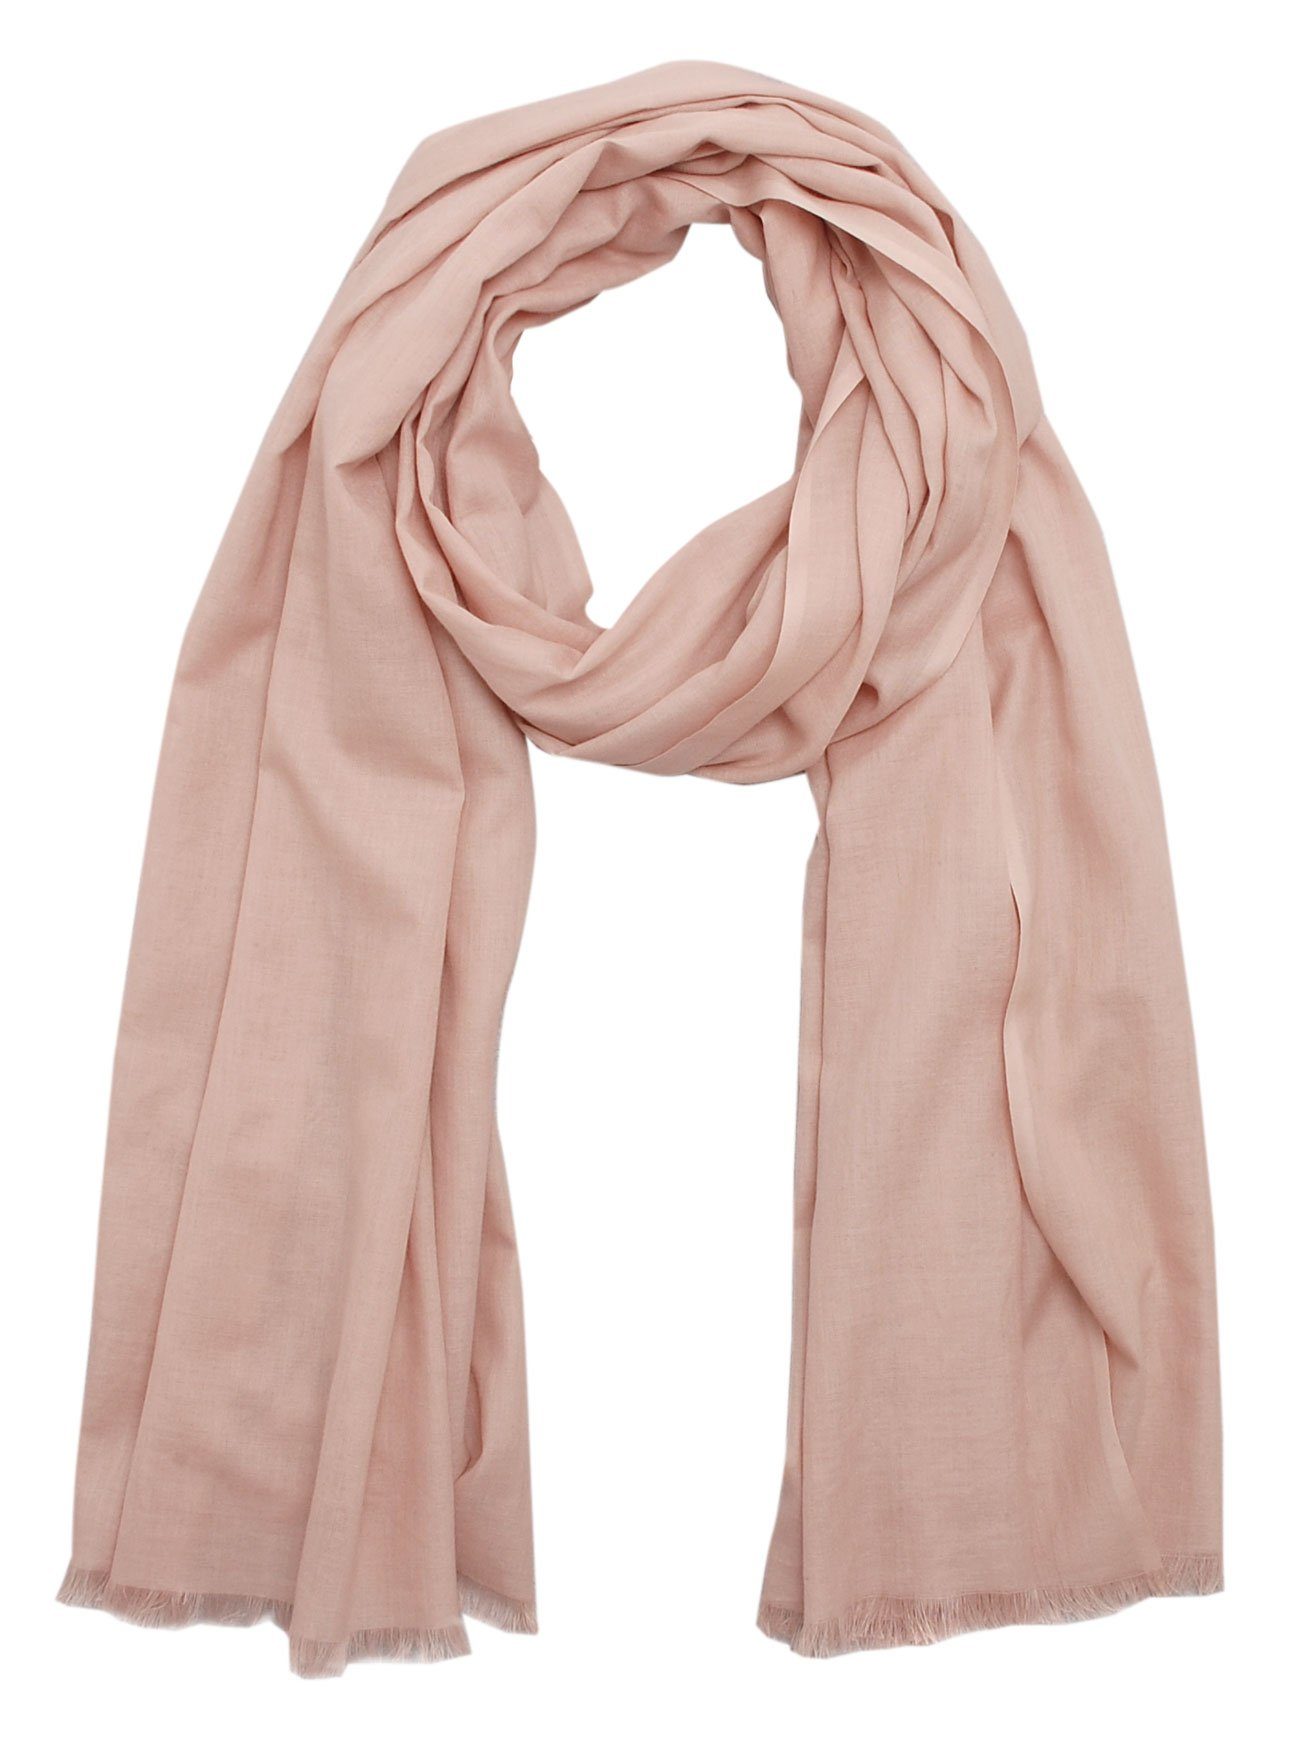 Bovari Schal Damen-Schal aus 100% gekämmter Bio-Baumwolle - handgewebt, - leicht, atmungsaktiv, dünn - Sommerschal in XL Größe 180x70 cm rosa / smoke rose